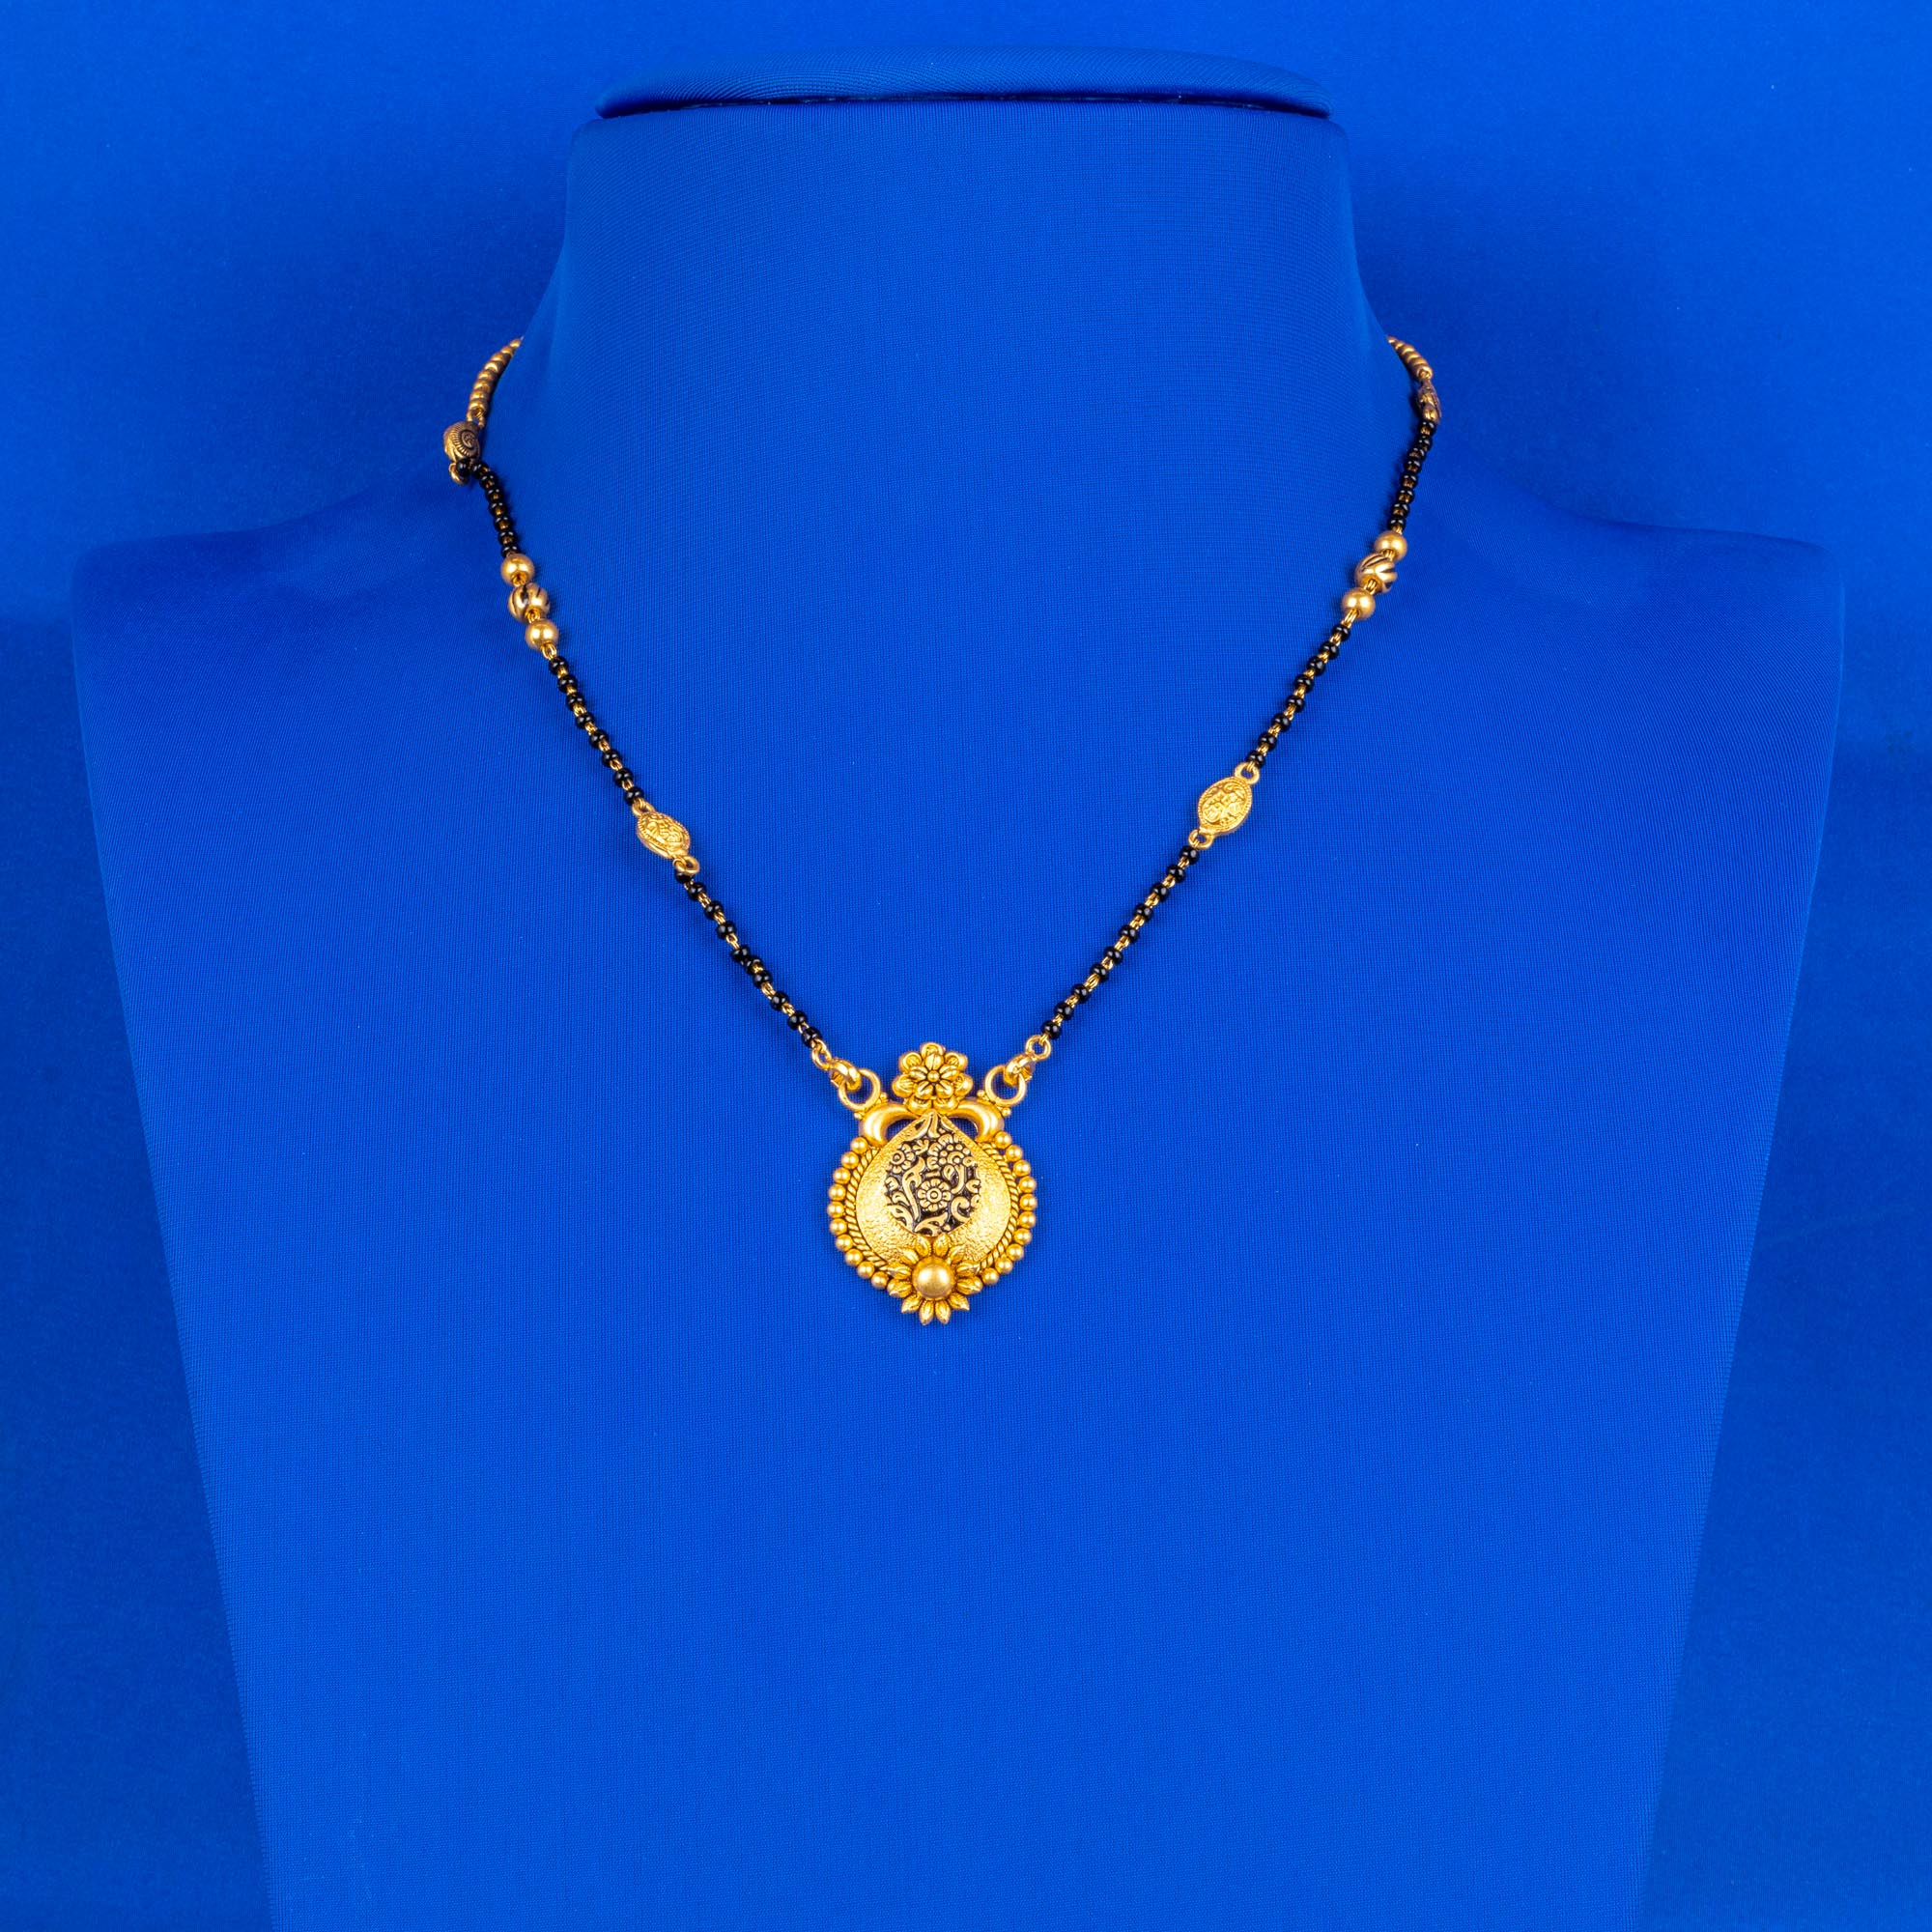 Regal Adornments: 22K Gold 'Antique' Mangalsutra Necklace